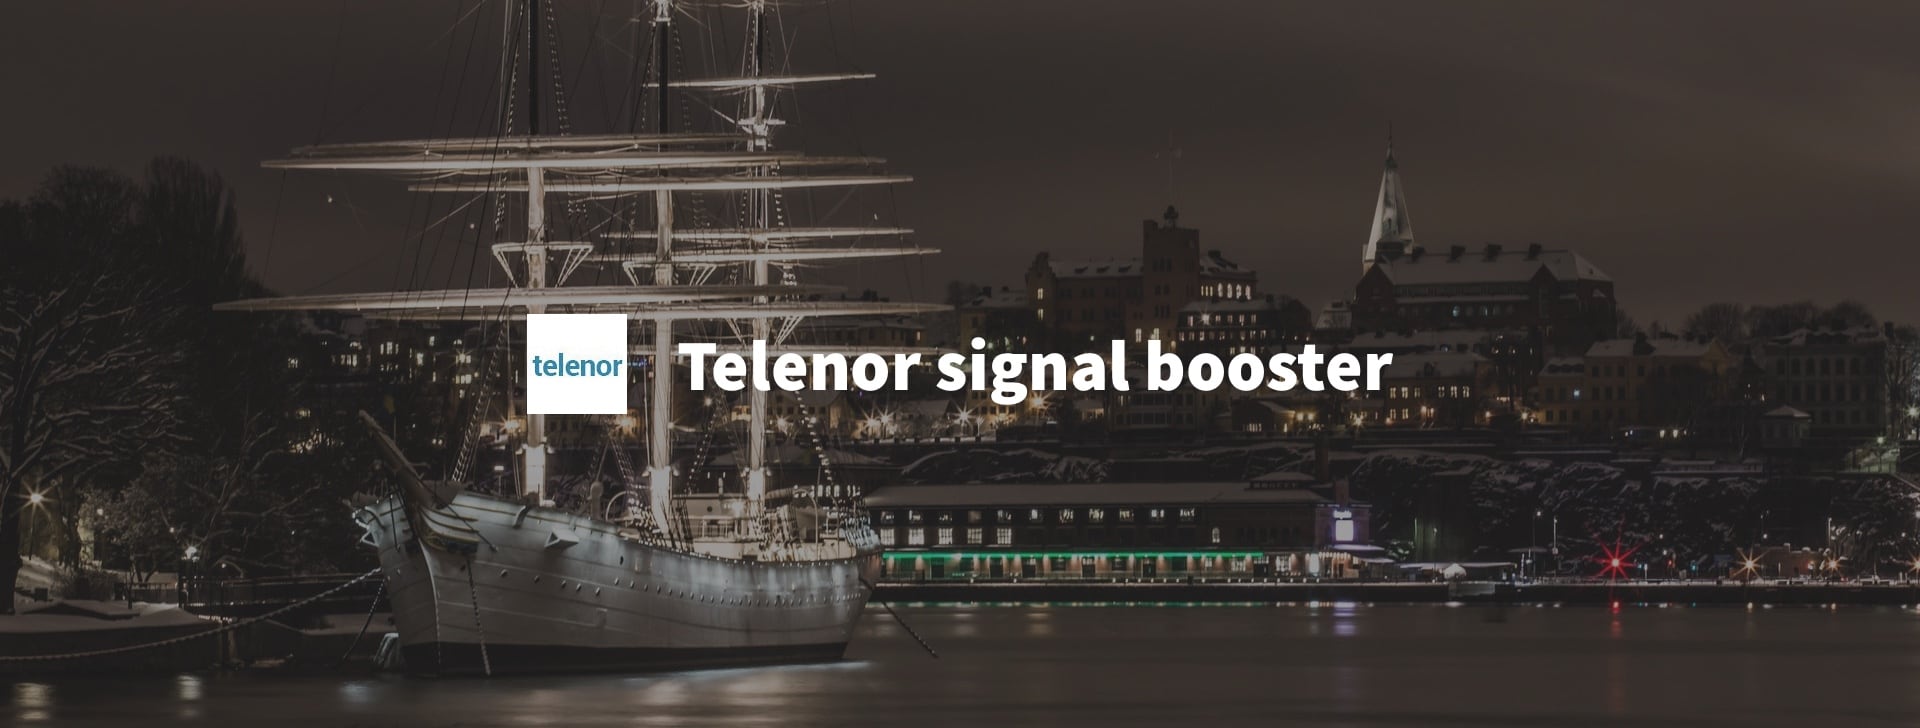 Telenor mobile signal